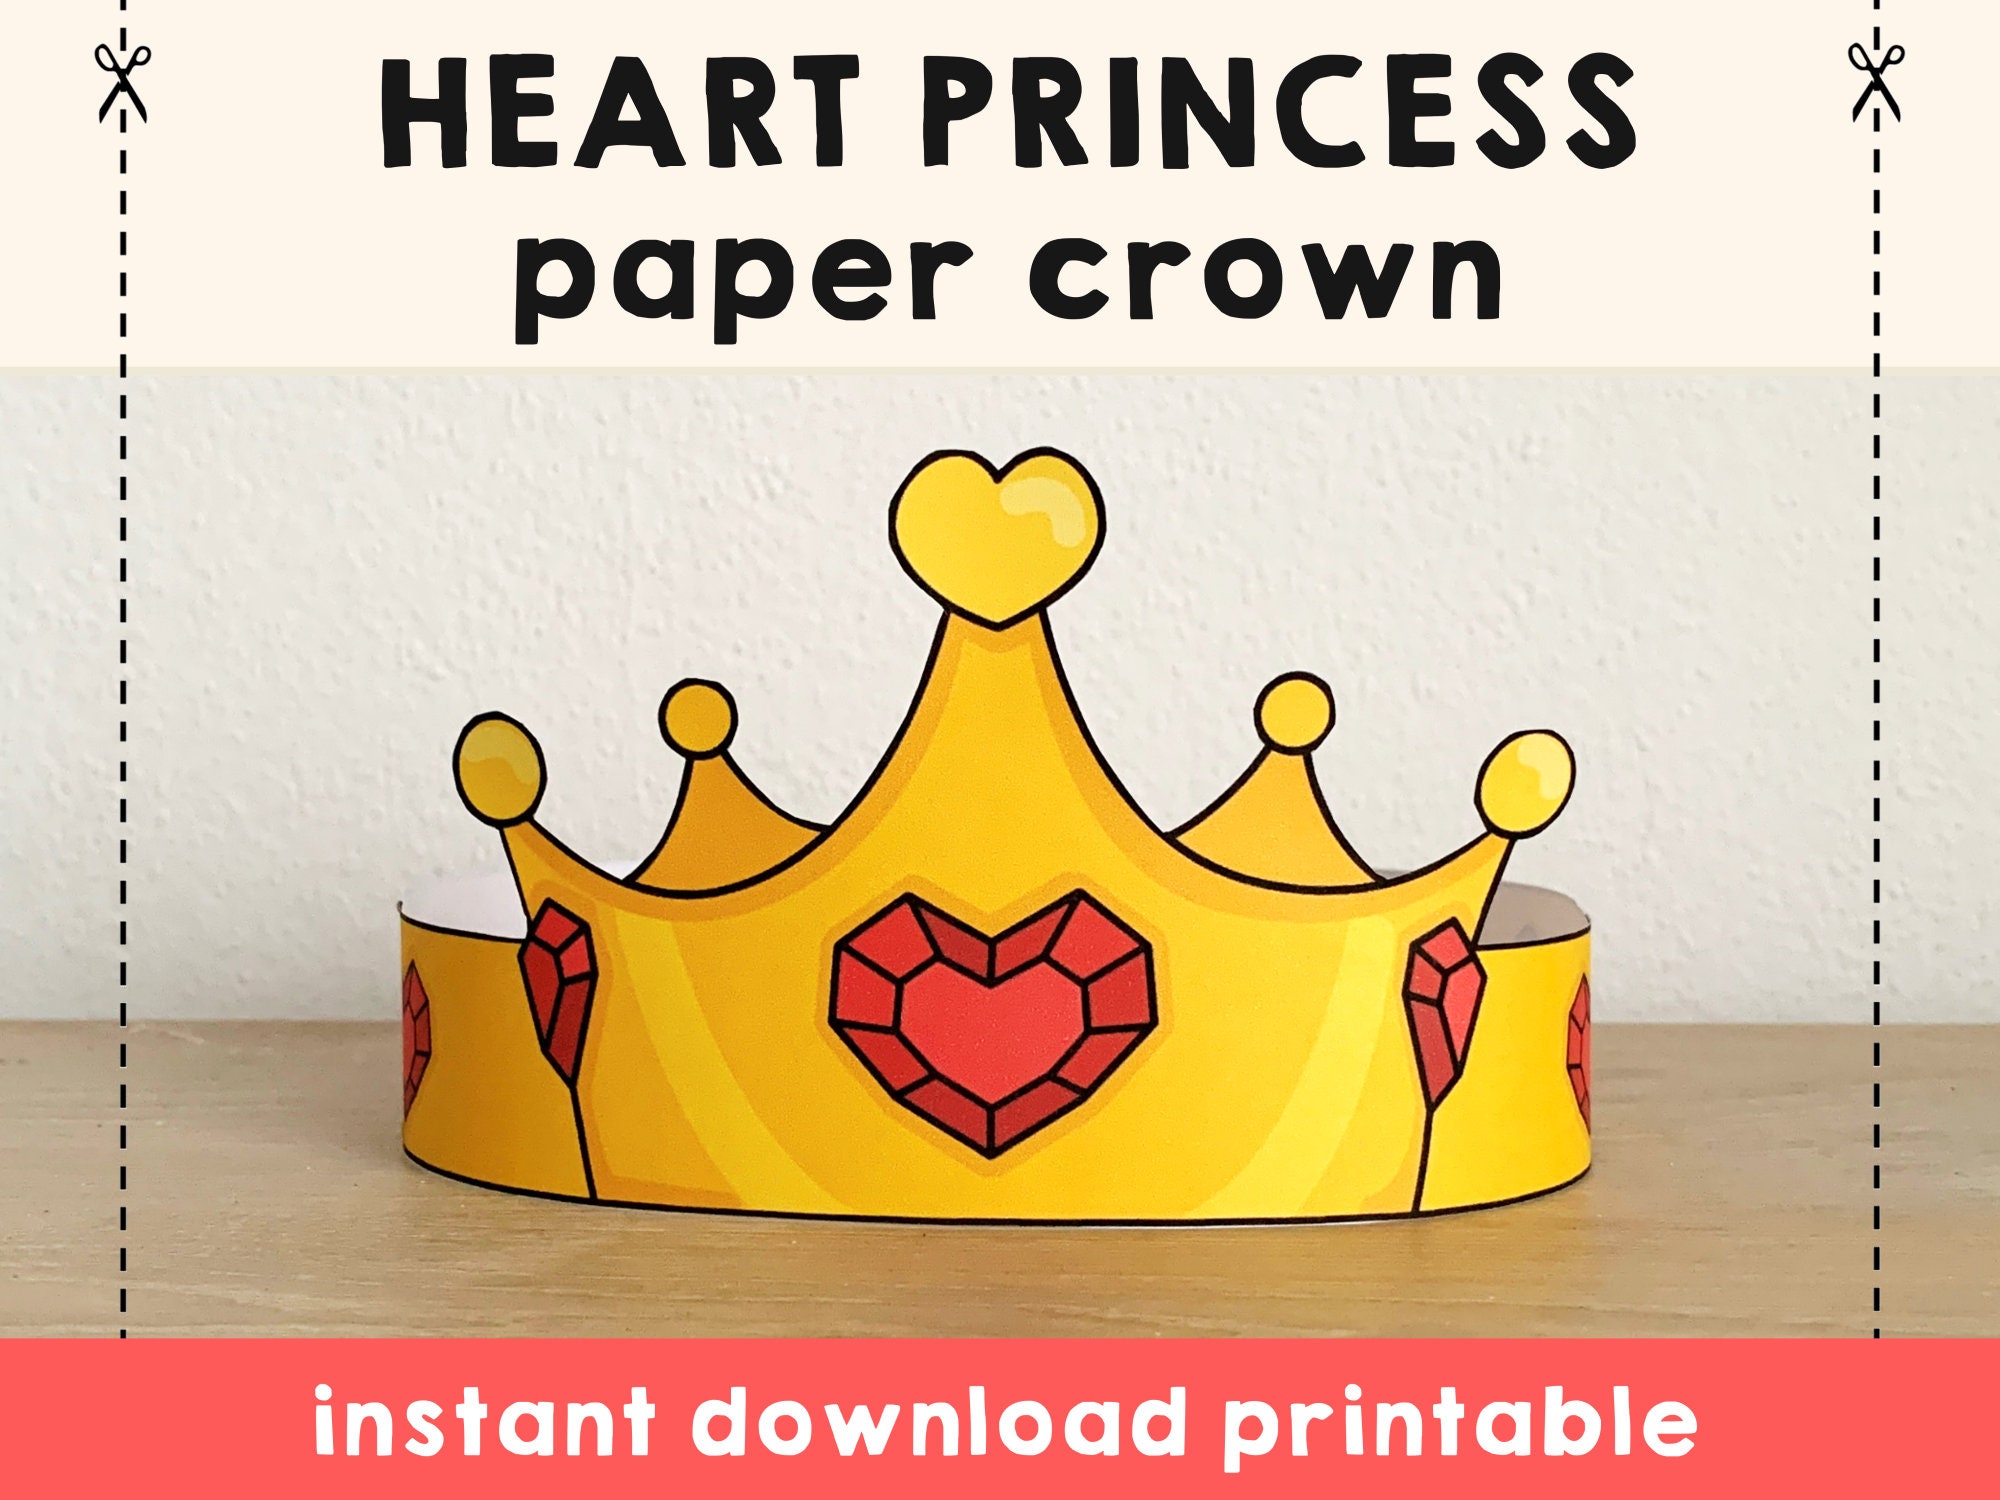 Princess Paper Crown Coloring Printable Kids Craft Princess Birthday Party  Printable Favor Princess Costume DIY Printable Instant Download -   Denmark